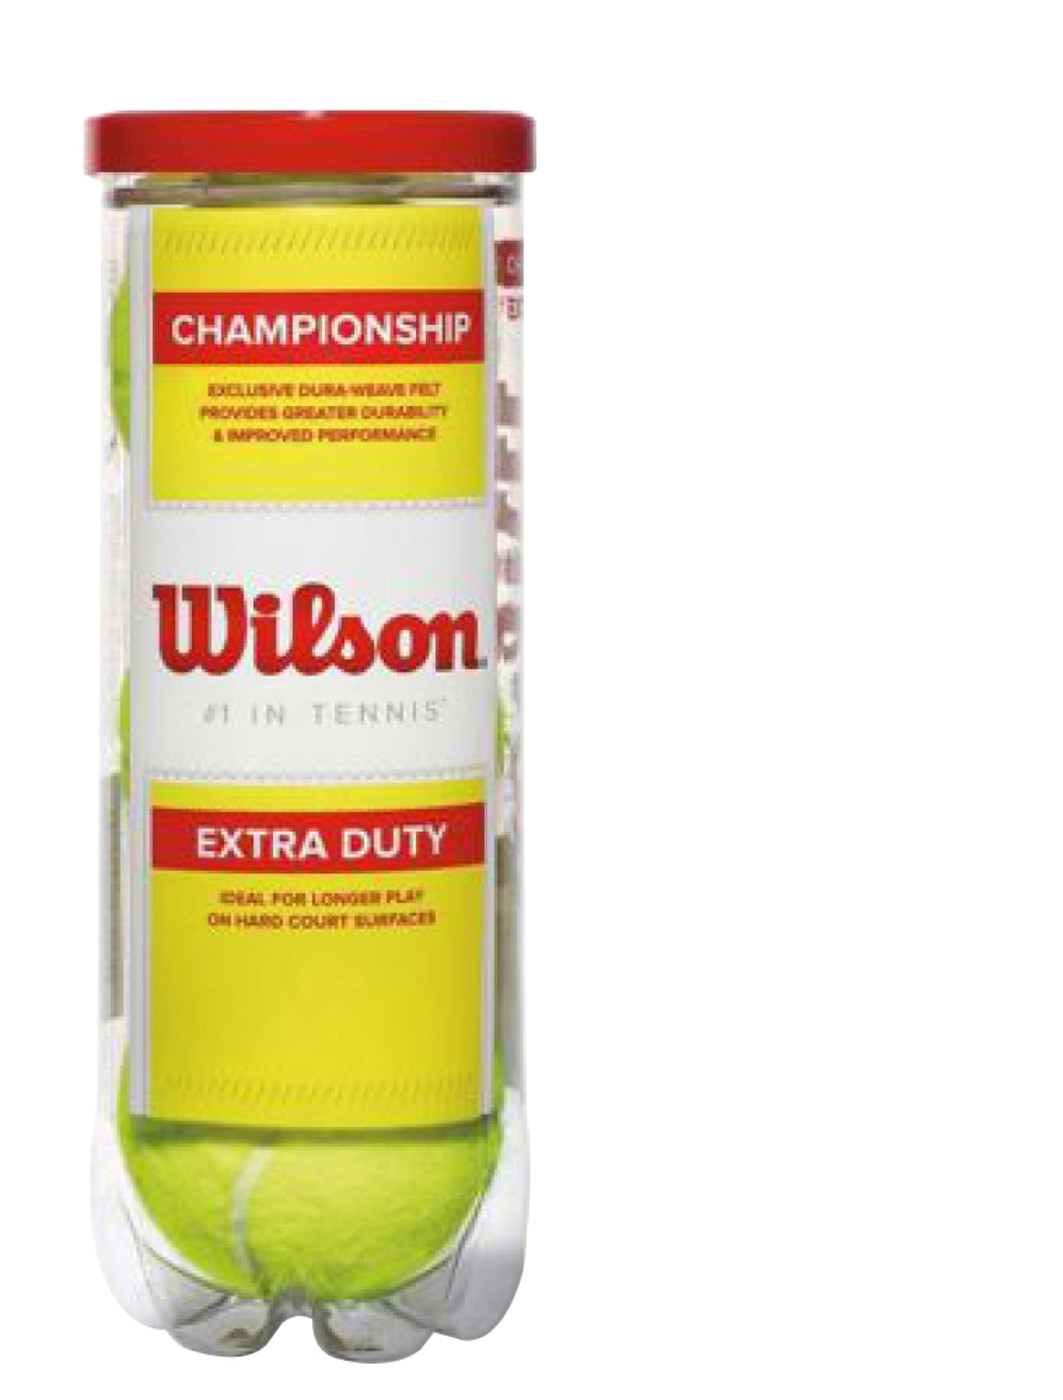 Tennisball CHAMPIONSHIP WILSON